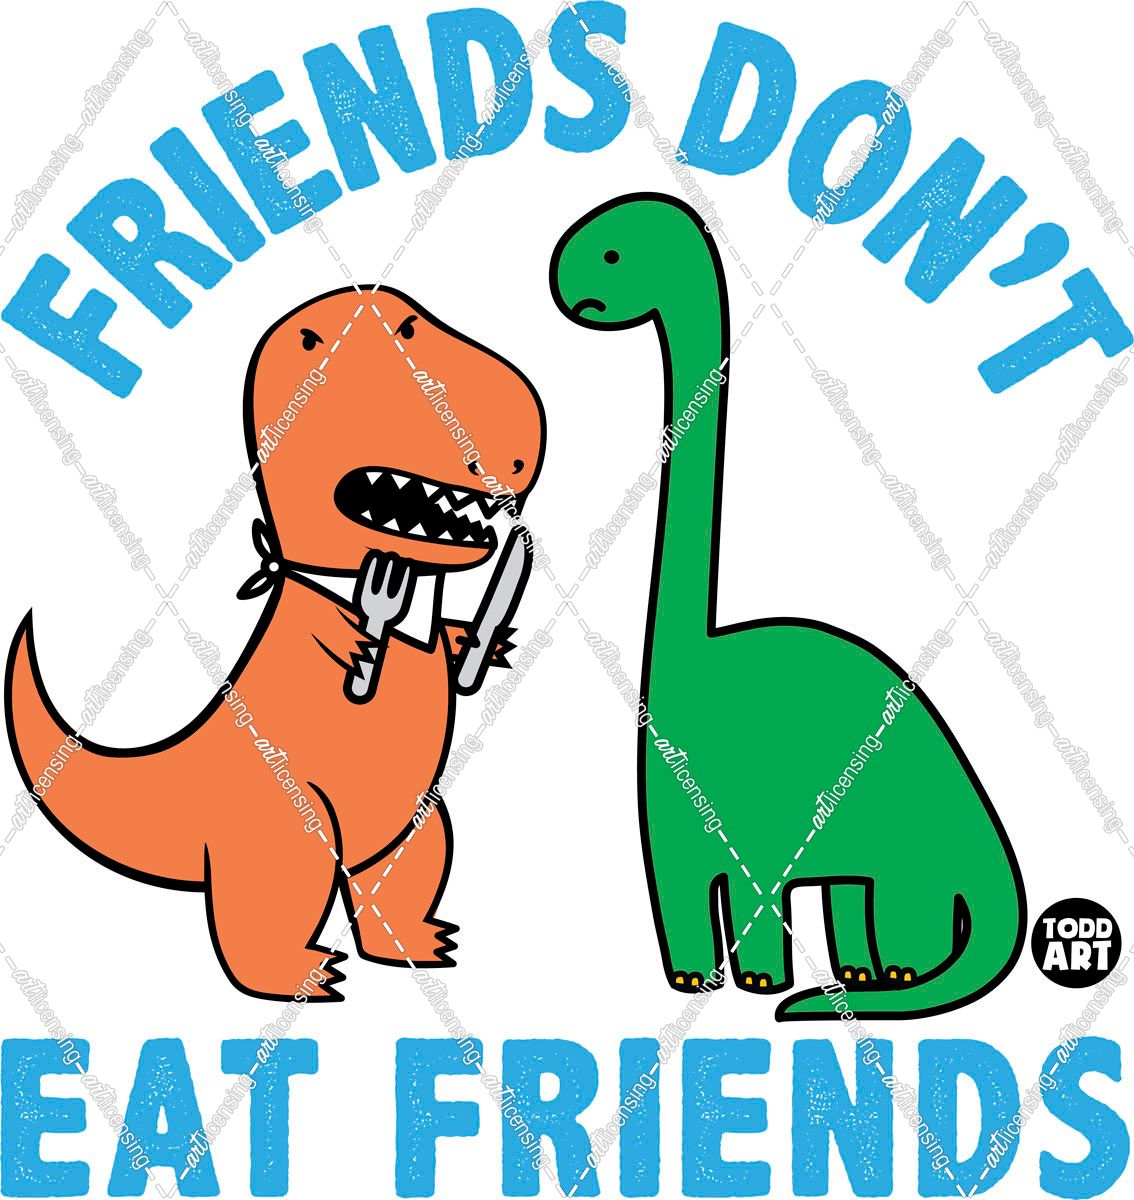 Friends Dont Eat Friends Dinos